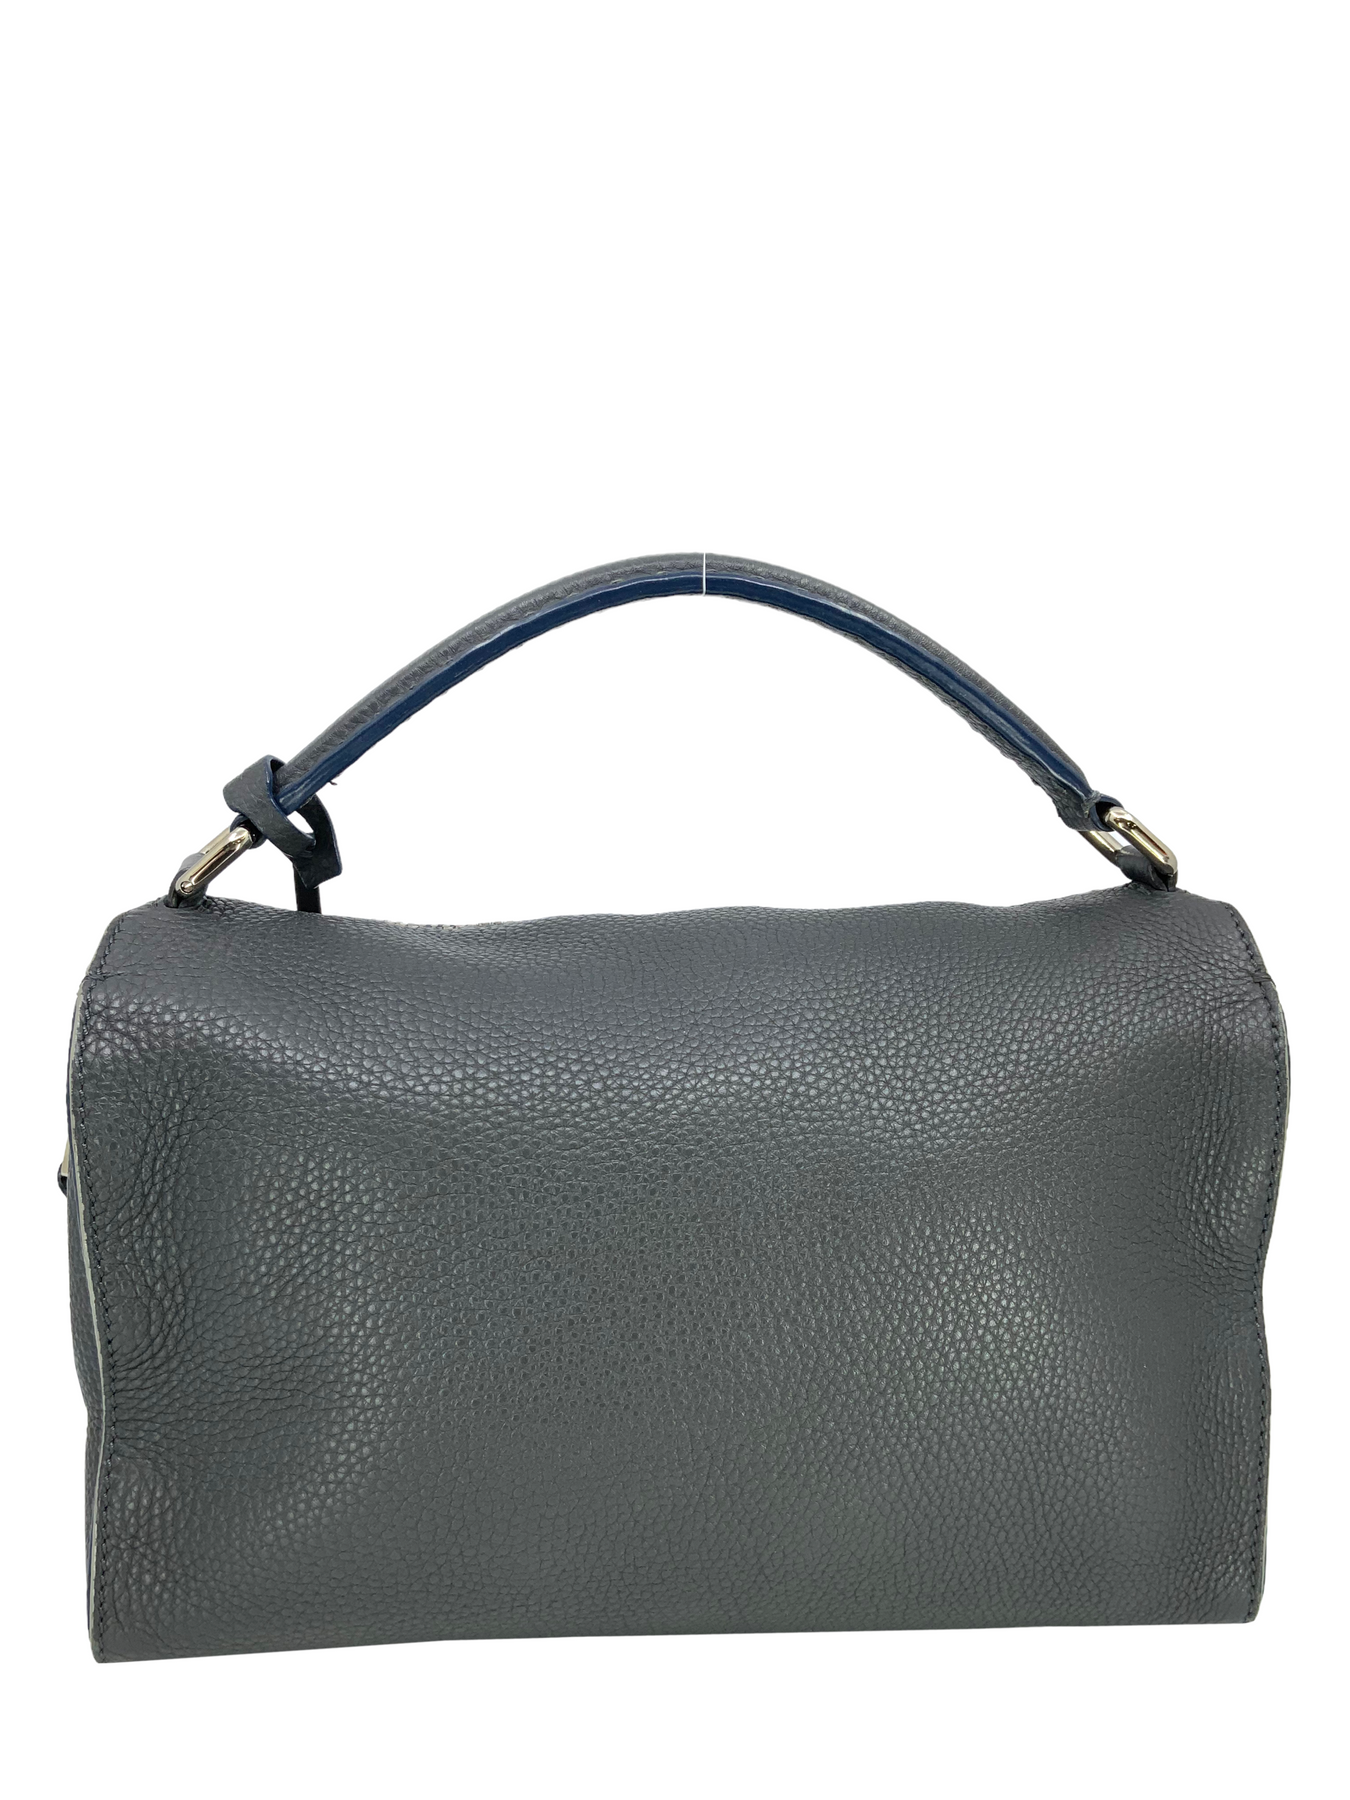 Coach, Bags, Coach Gray Alma Pebbled Leather Handbag